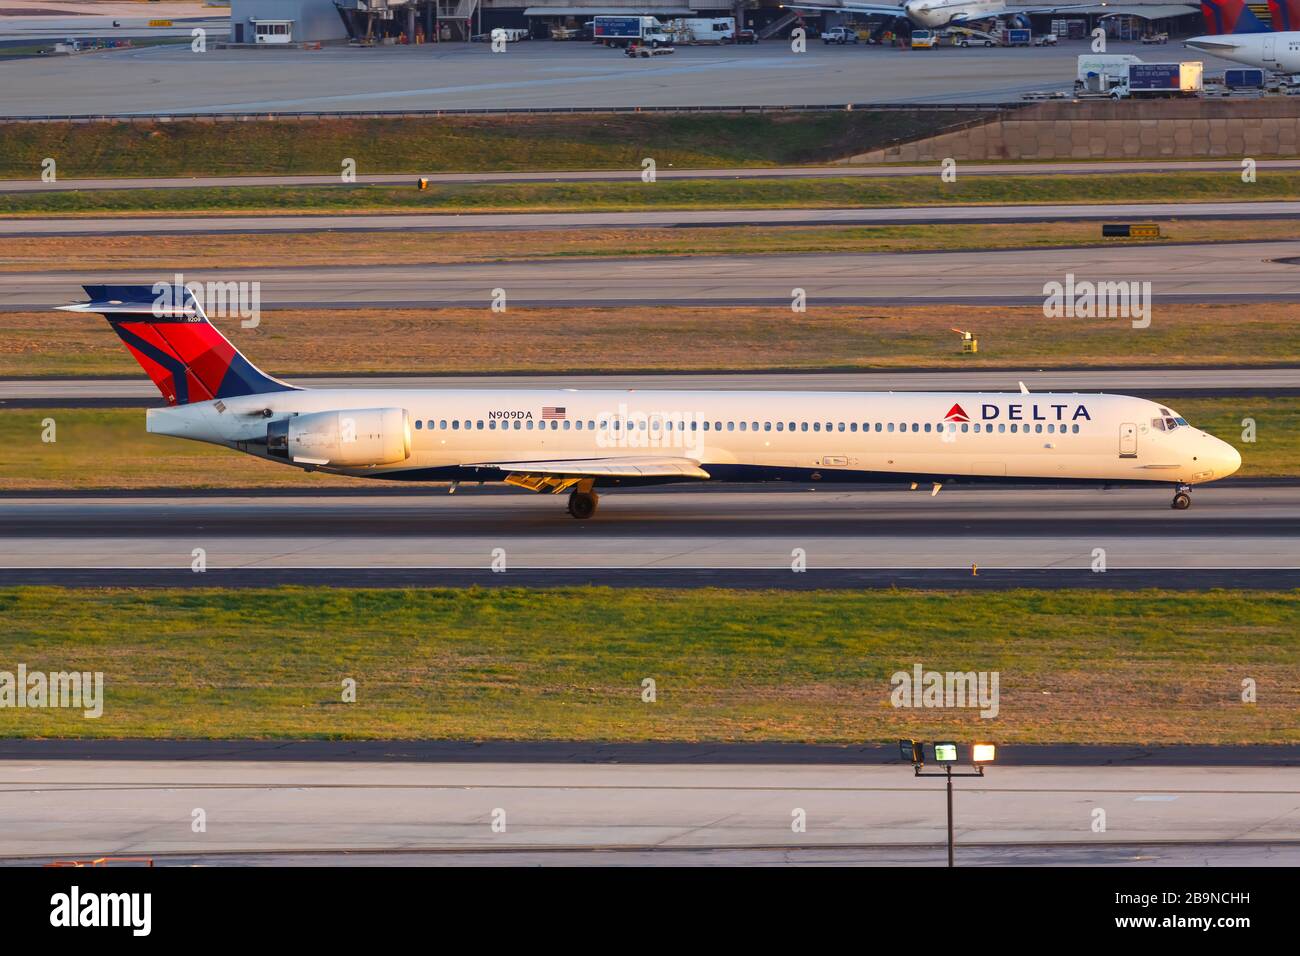 Atlanta, Georgia – April 2, 2019: Delta Air Lines McDonnell Douglas MD-90 airplane at Atlanta airport (ATL) in Georgia. Stock Photo